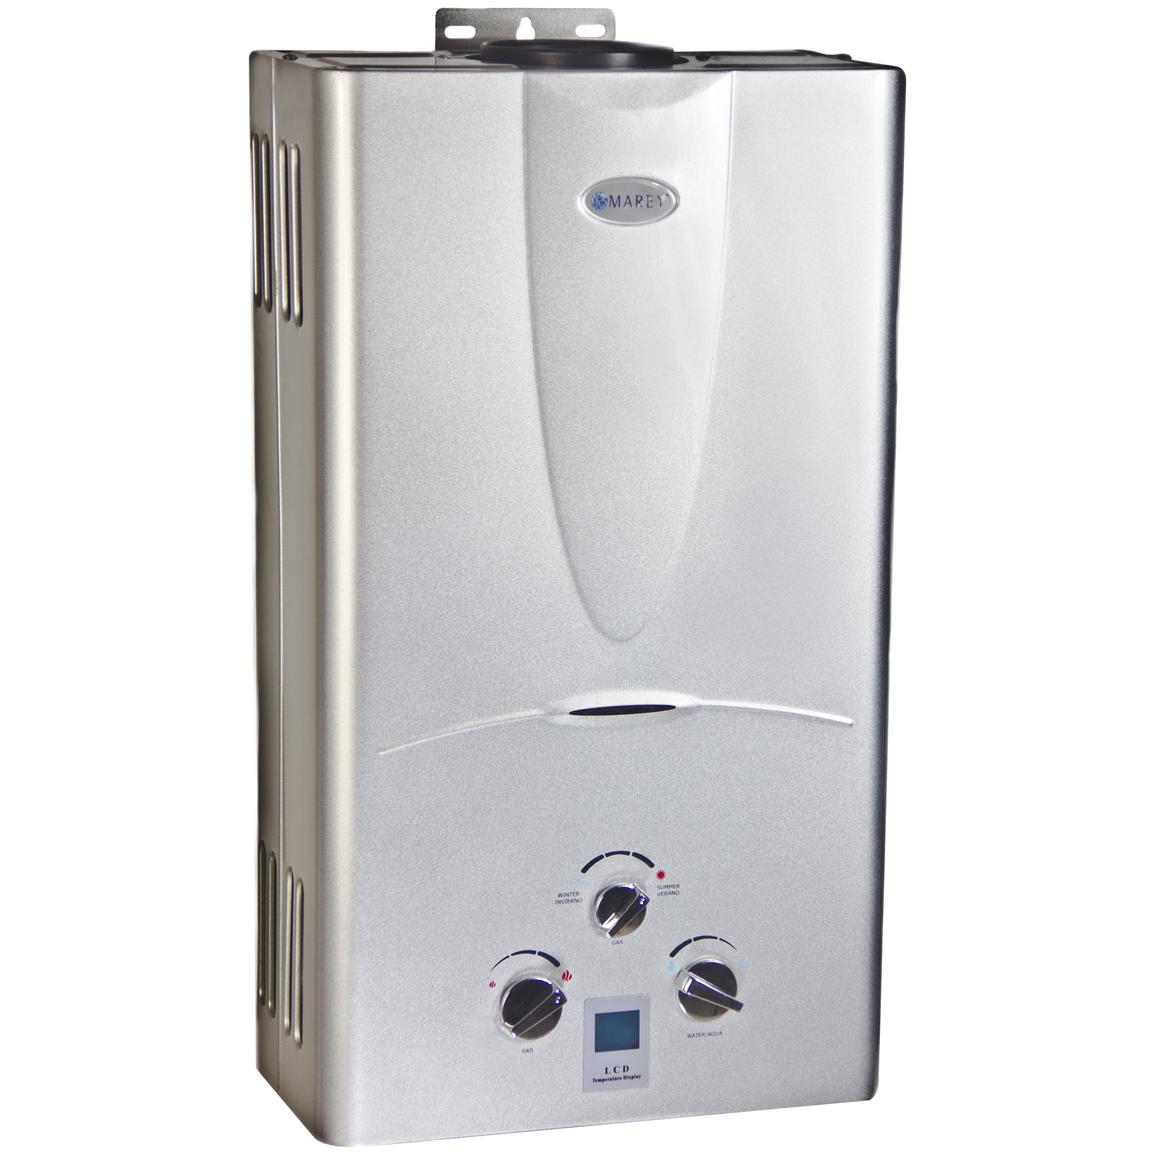 marey-power-gas-10l-digital-panel-tankless-water-heater-531322